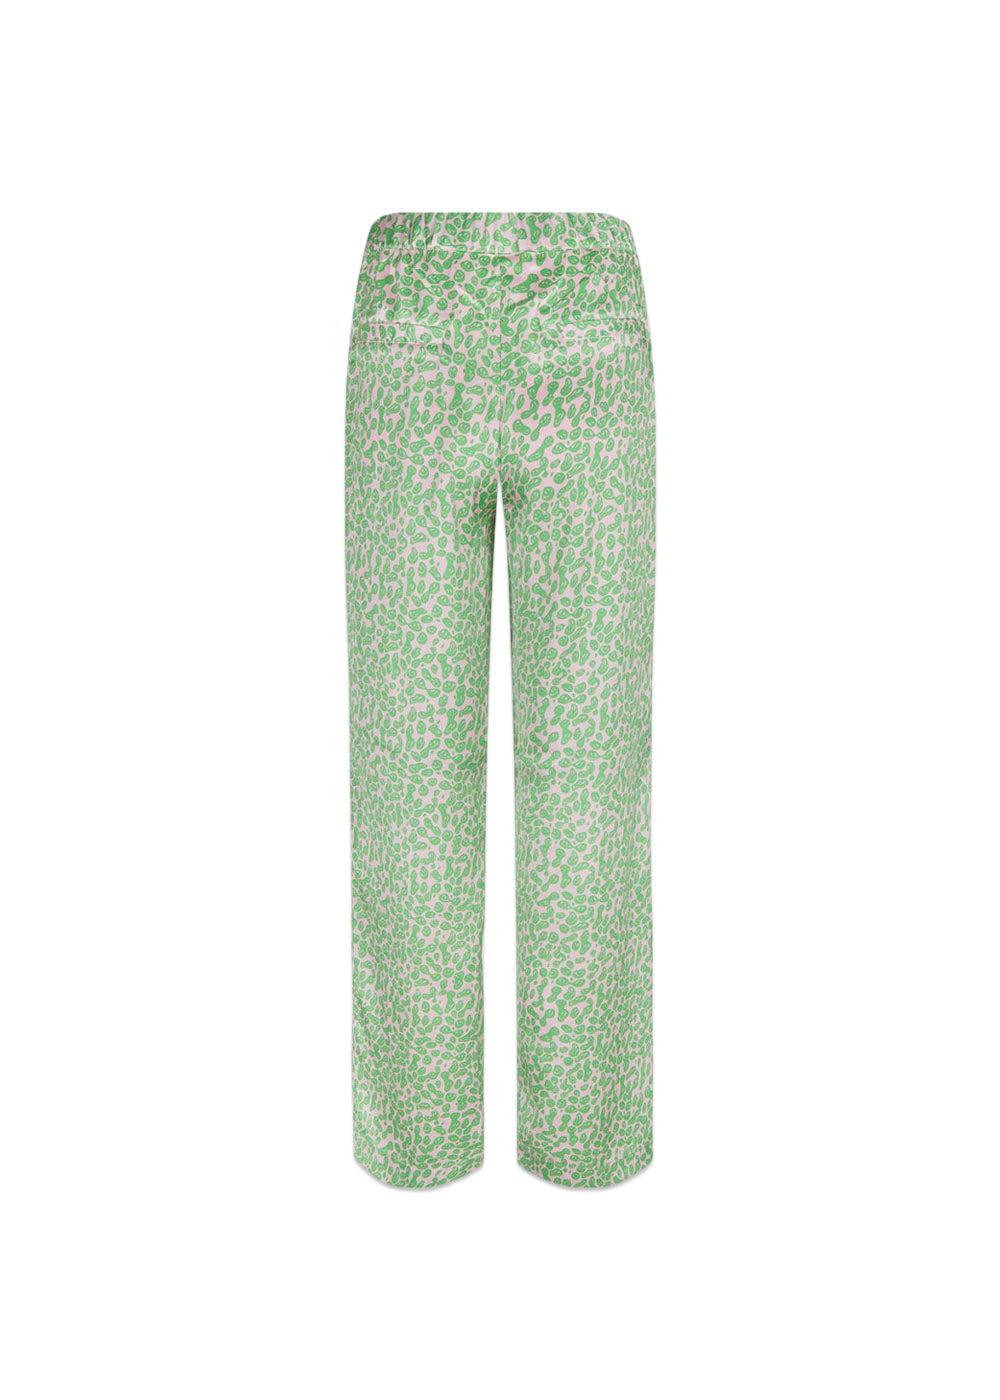 ClarkeMD print pants - Classic Green Smiley